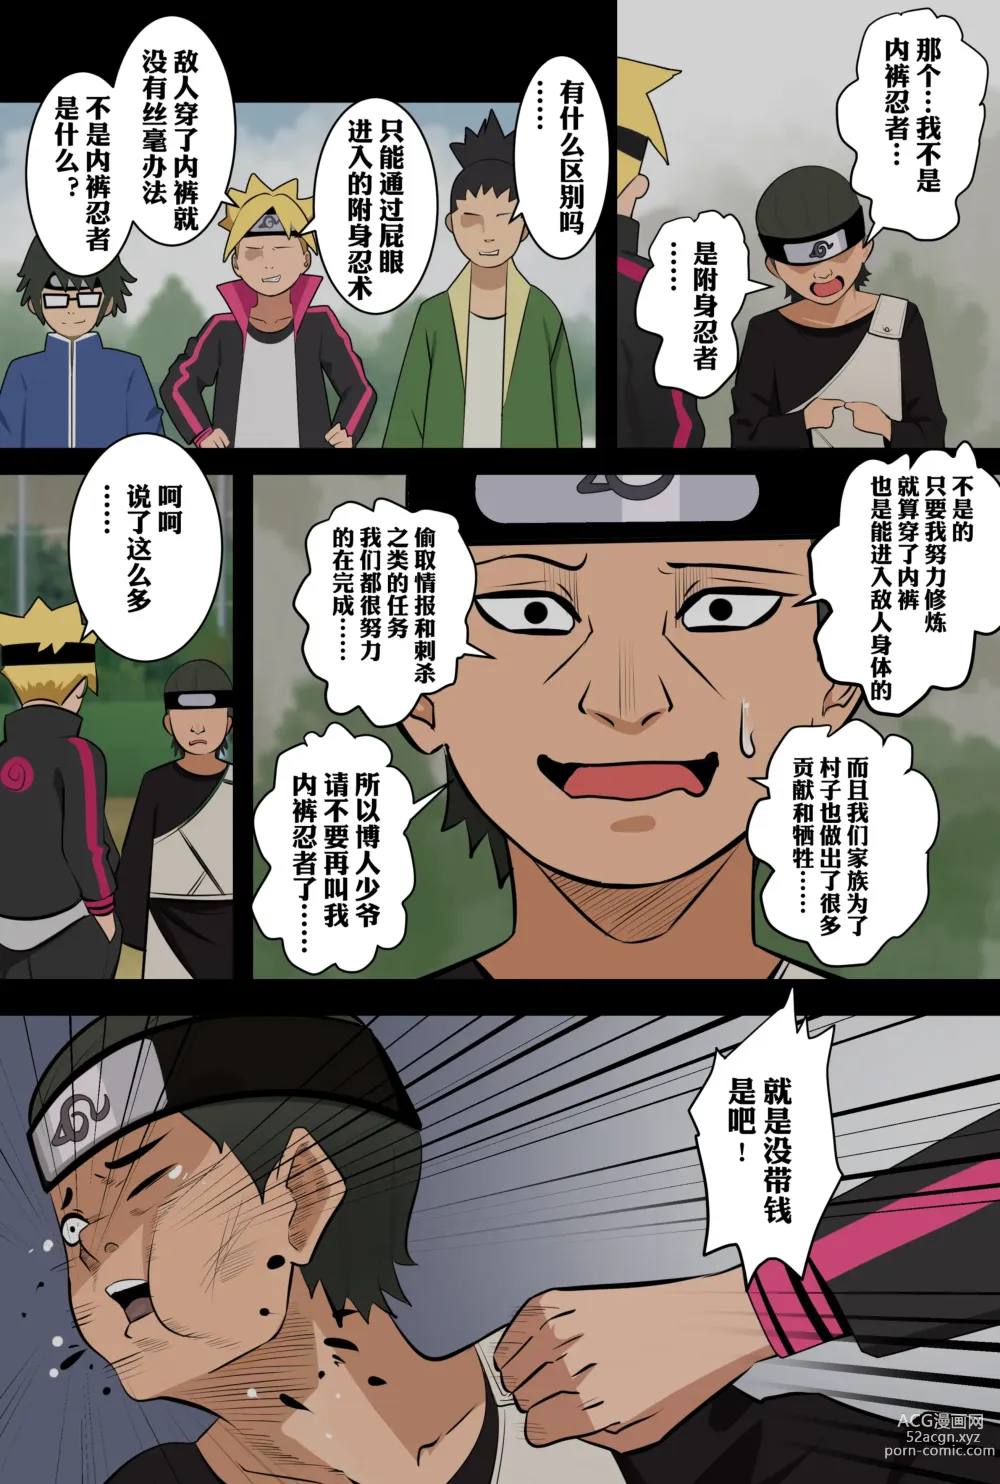 Page 2 of doujinshi 附身忍者的复仇